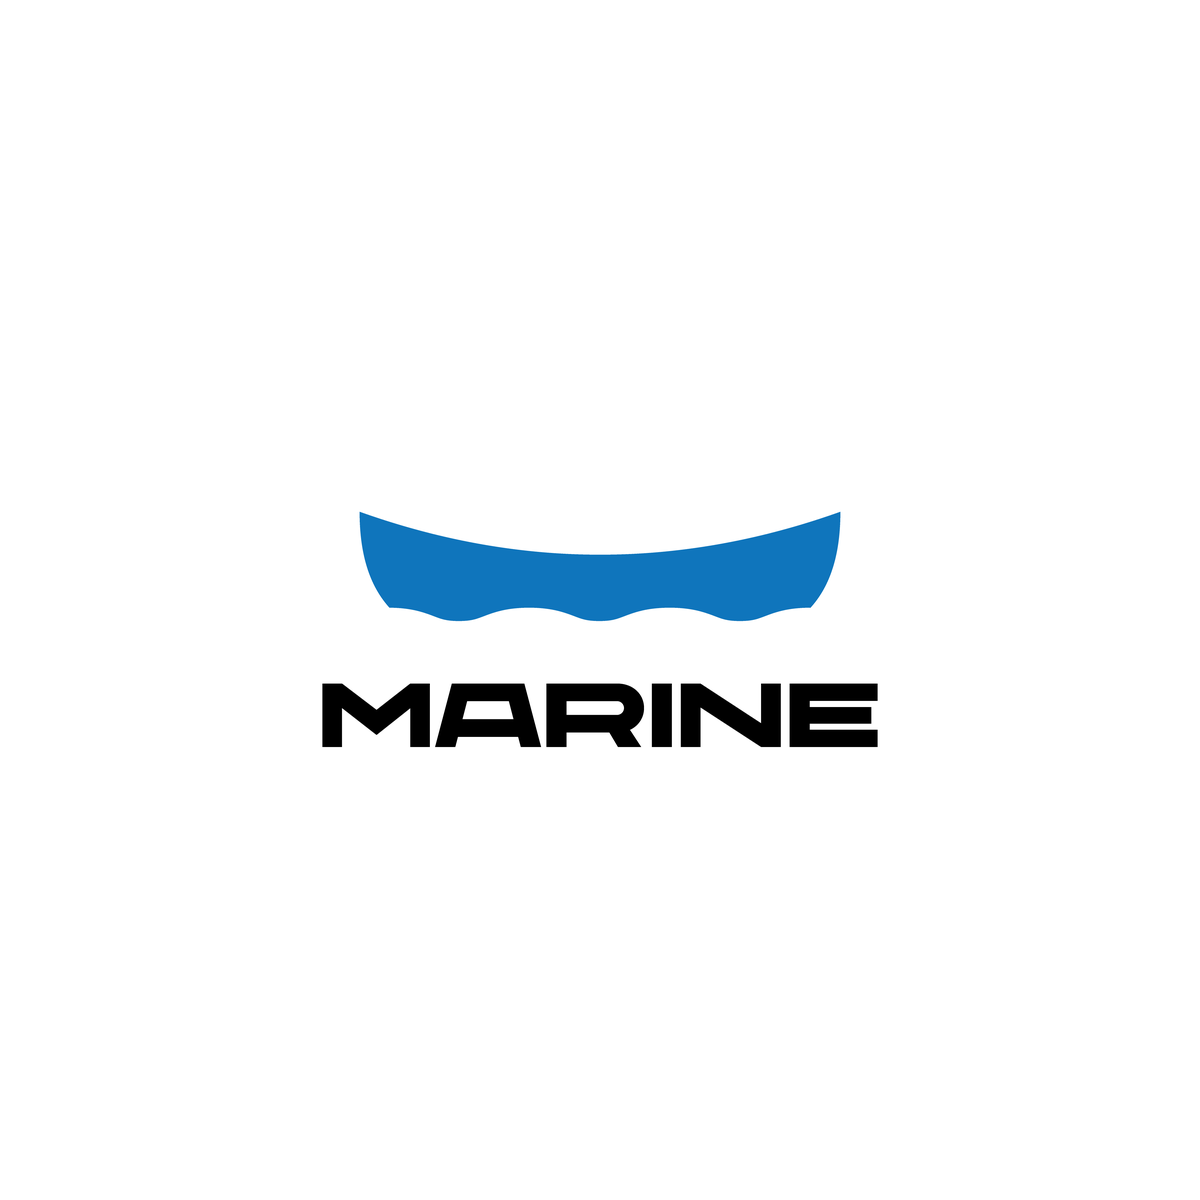 Marine - Boat Logo by João Costa on Dribbble